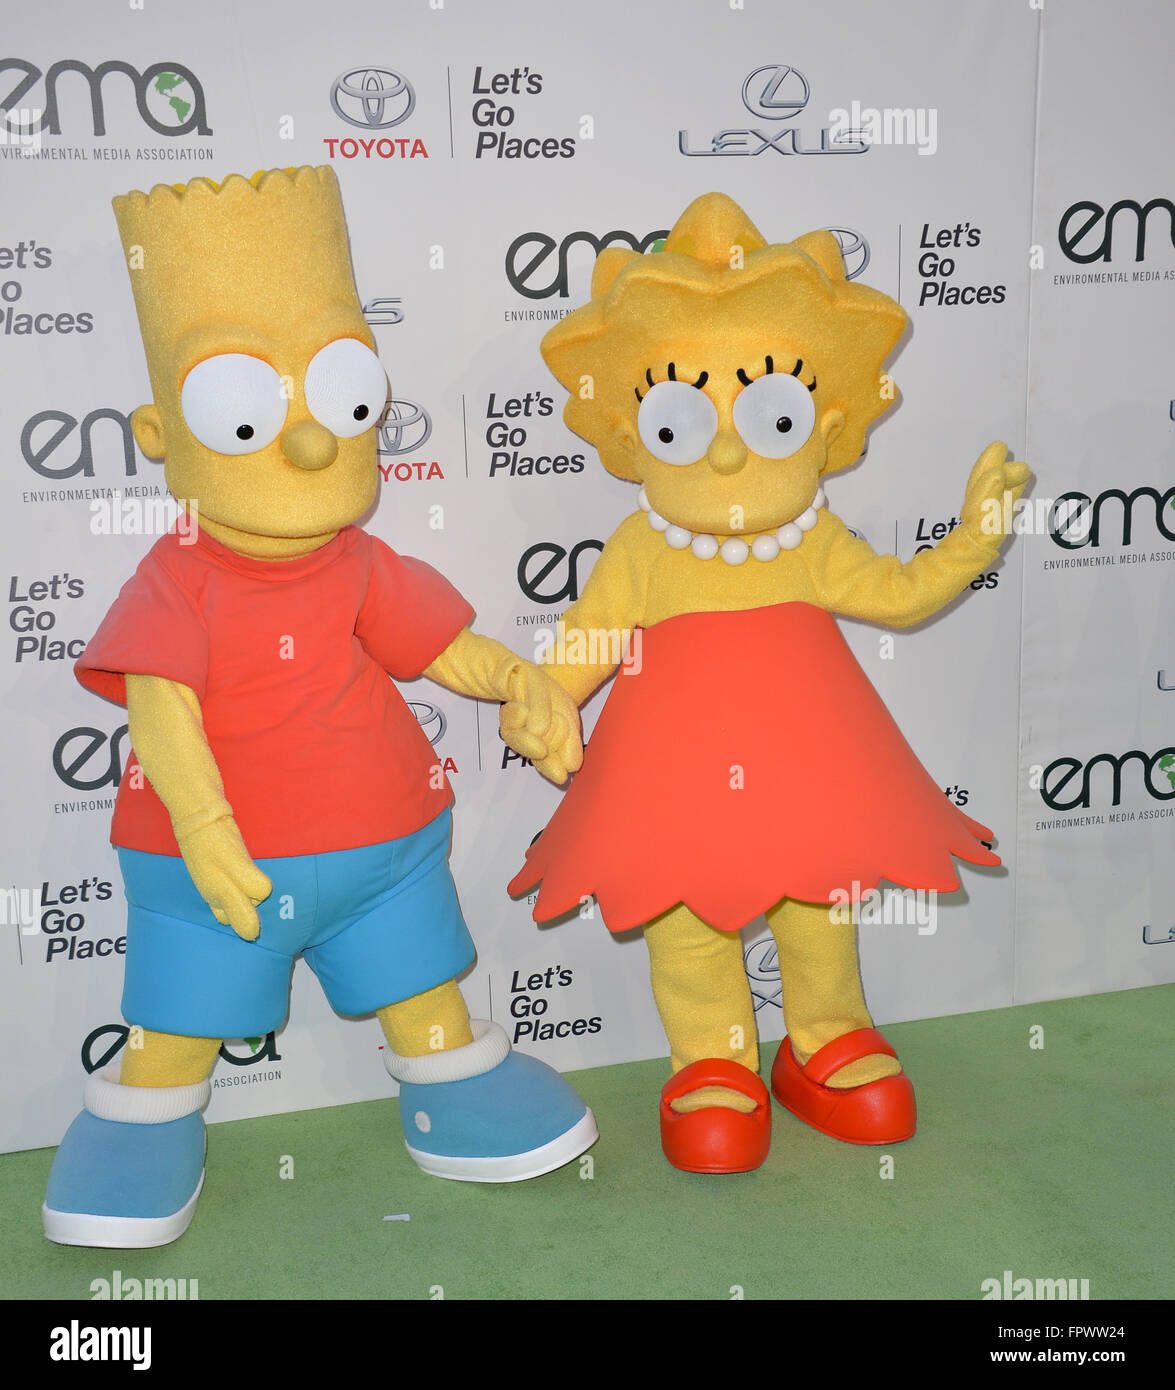 LOS ANGELES, CA - OCTOBER 24, 2015: Bart Simpson & Lisa Simpson characters at the 25th Annual Environmental Media Awards at Warner Bros. Studios, Burbank, CA. Stock Photo